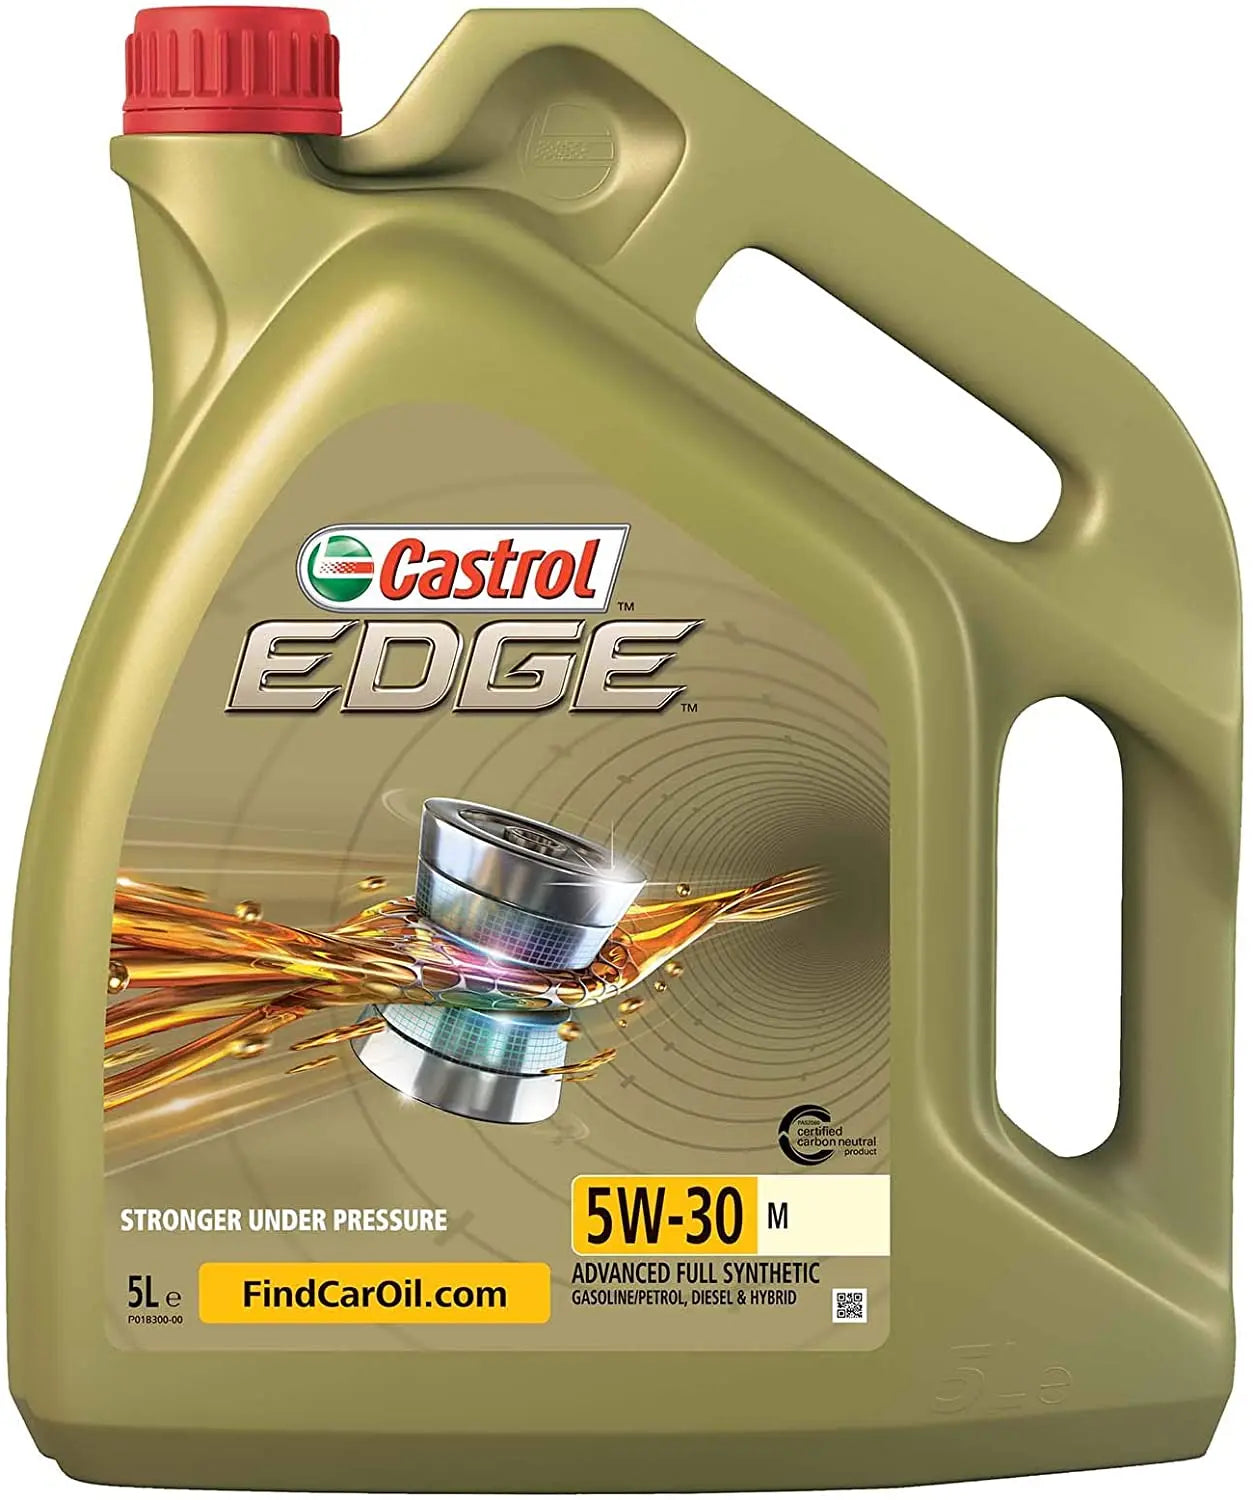 Castrol EDGE 5W30 Synthetic Engine/Motor Oil, 5-L